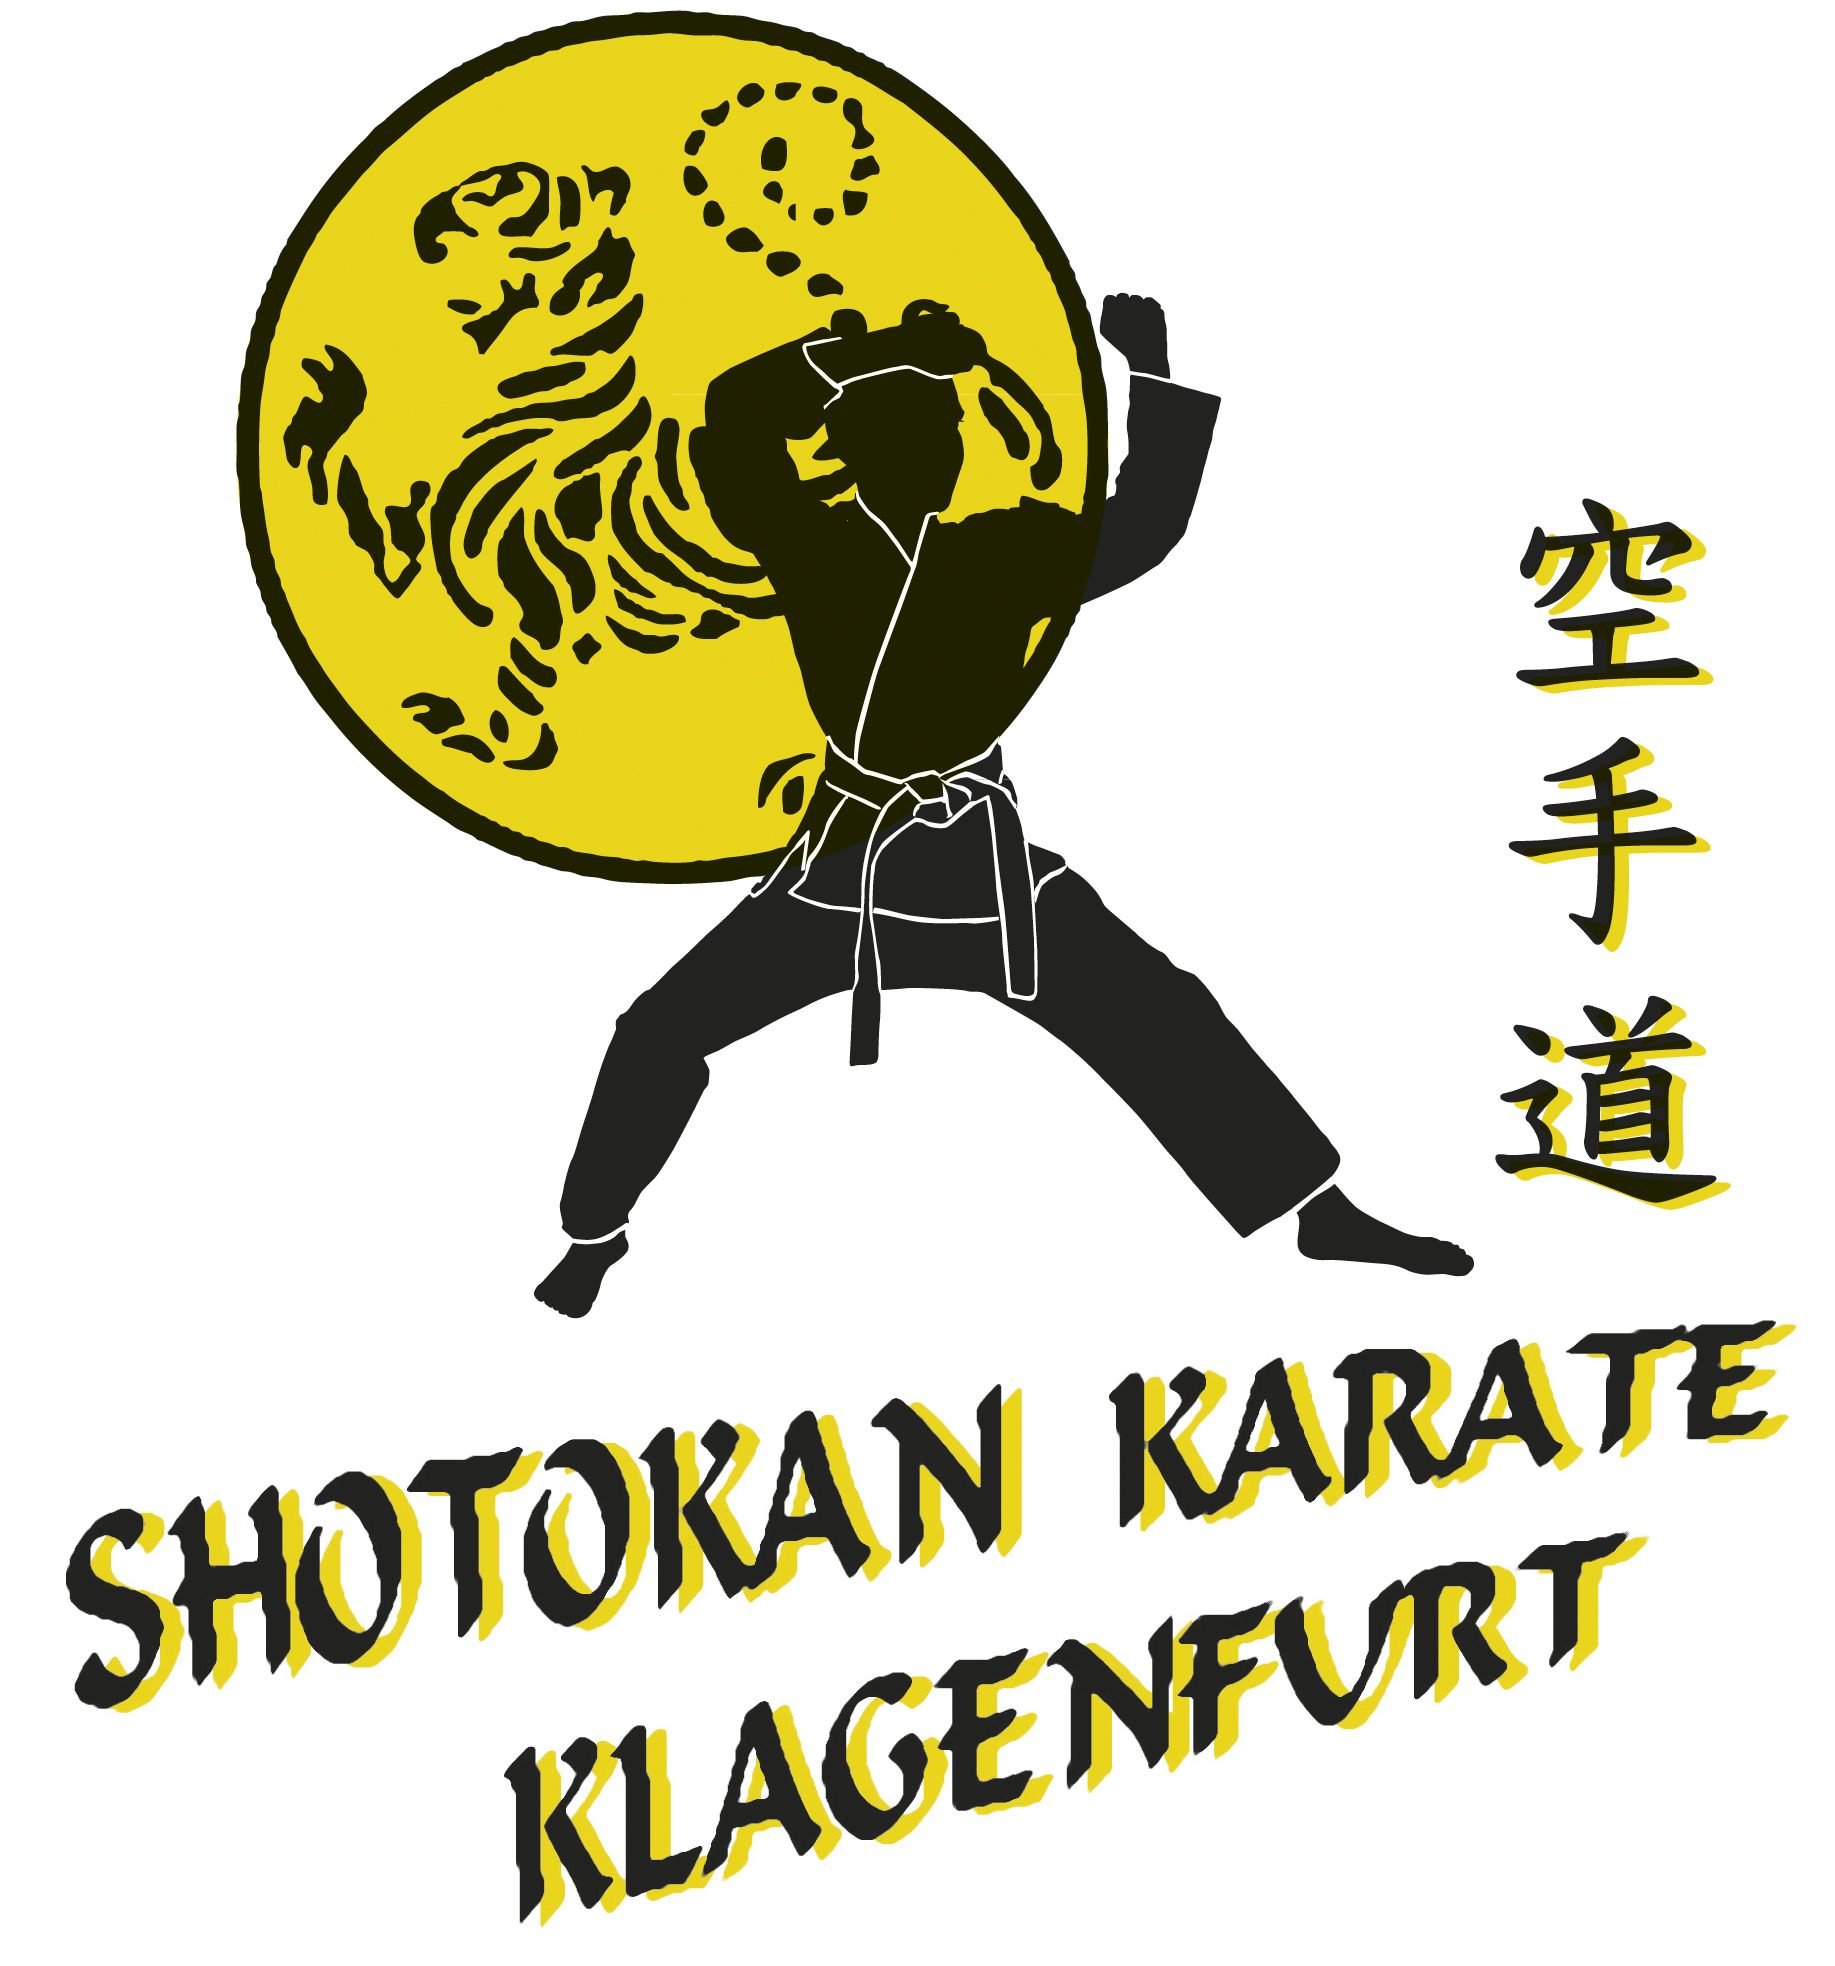 (c) Karate-klagenfurt.at